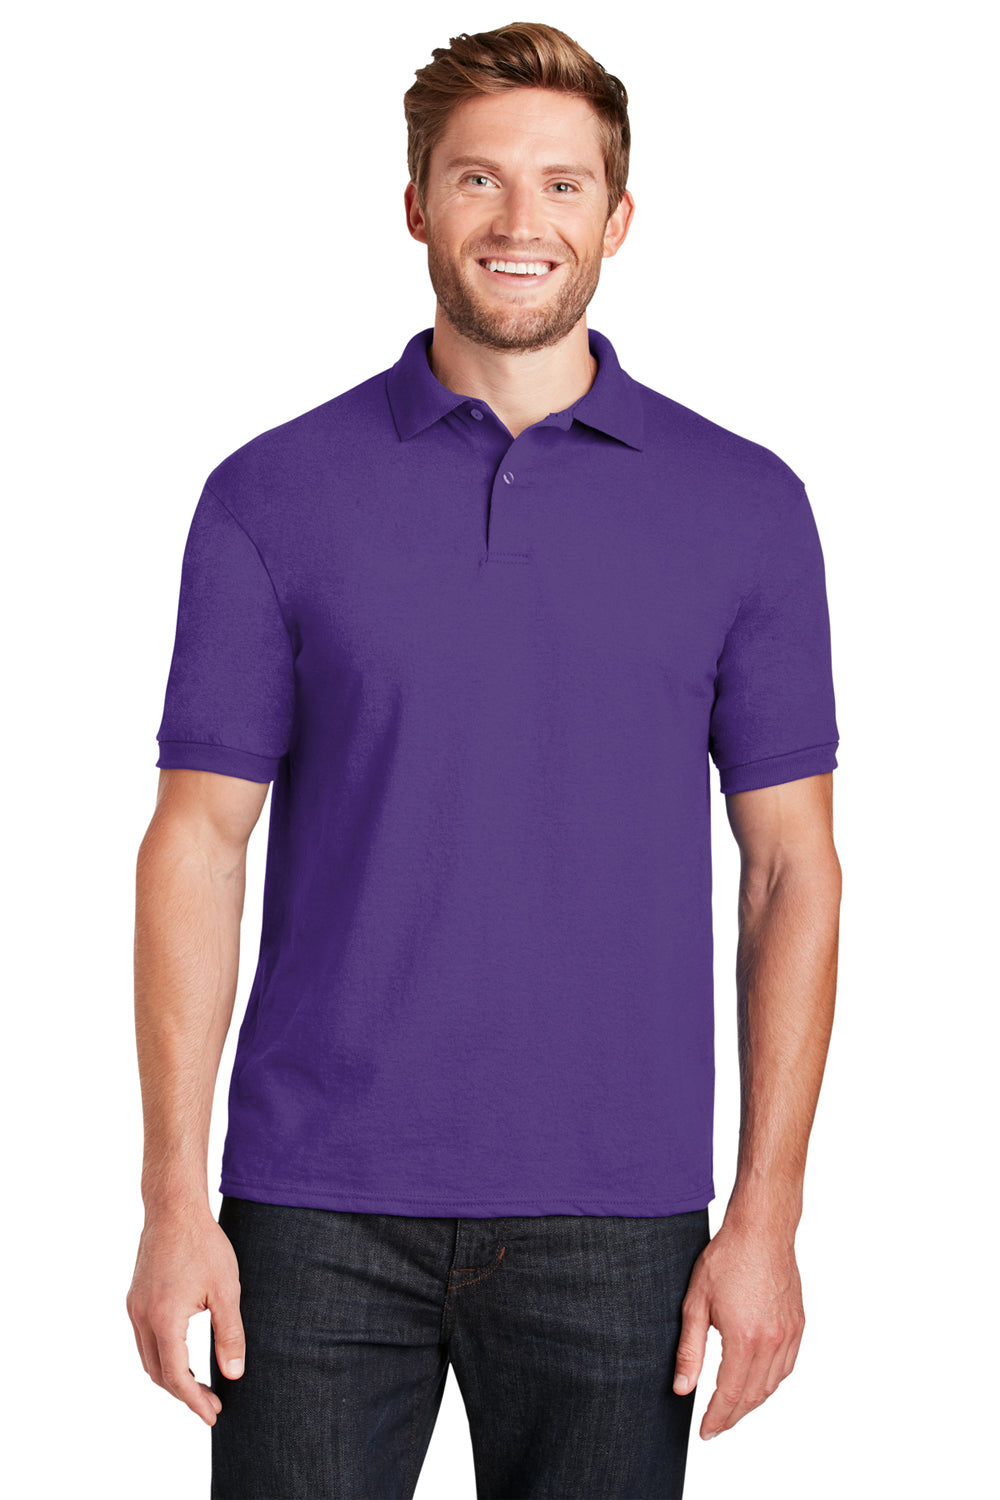 Hanes 054X/054 Mens EcoSmart Short Sleeve Polo Shirt Purple Front